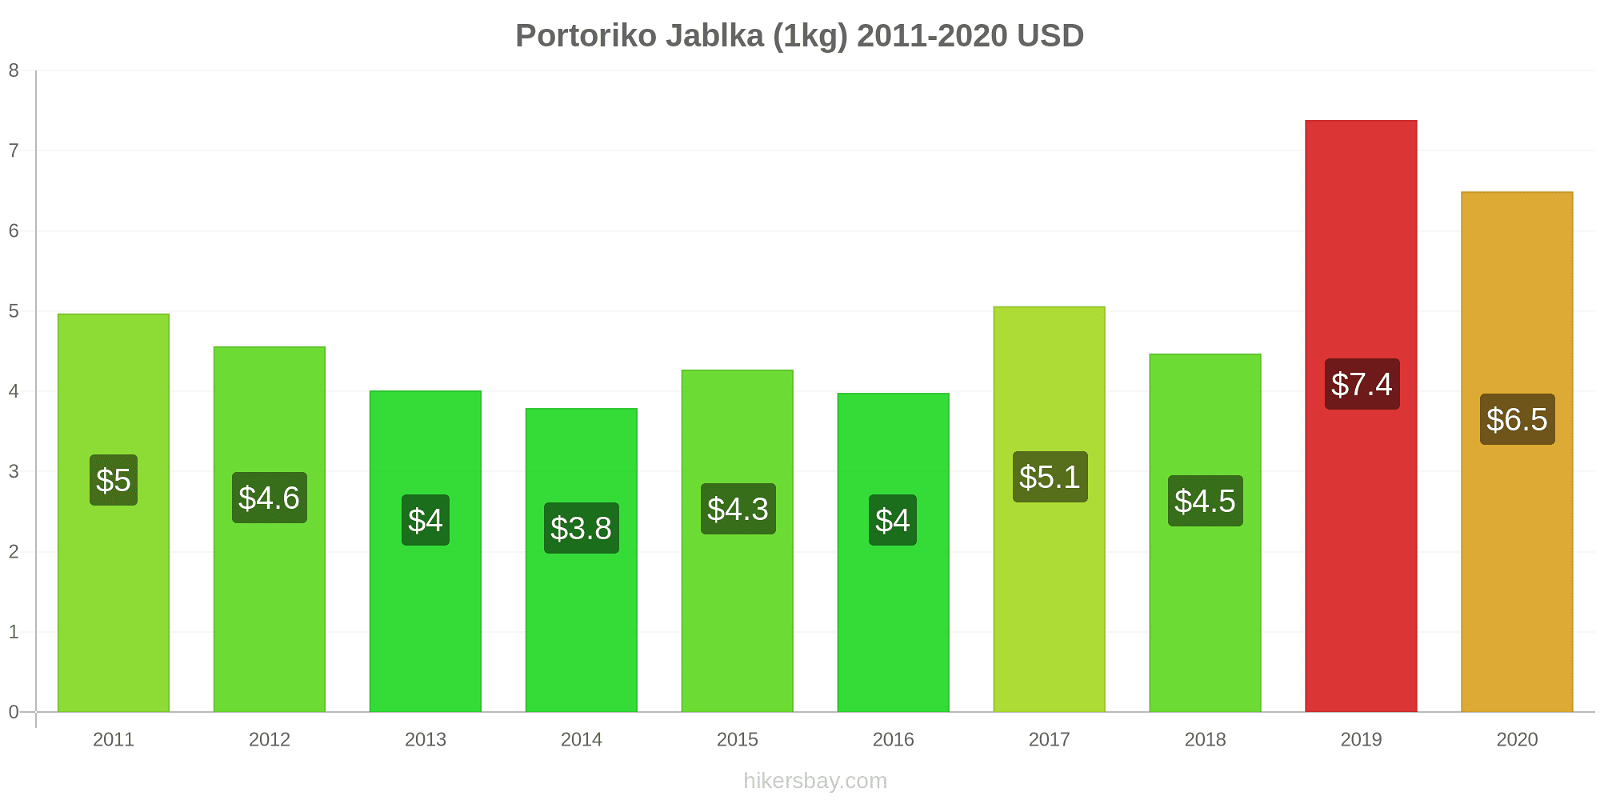 Portoriko změny cen Jablka (1kg) hikersbay.com